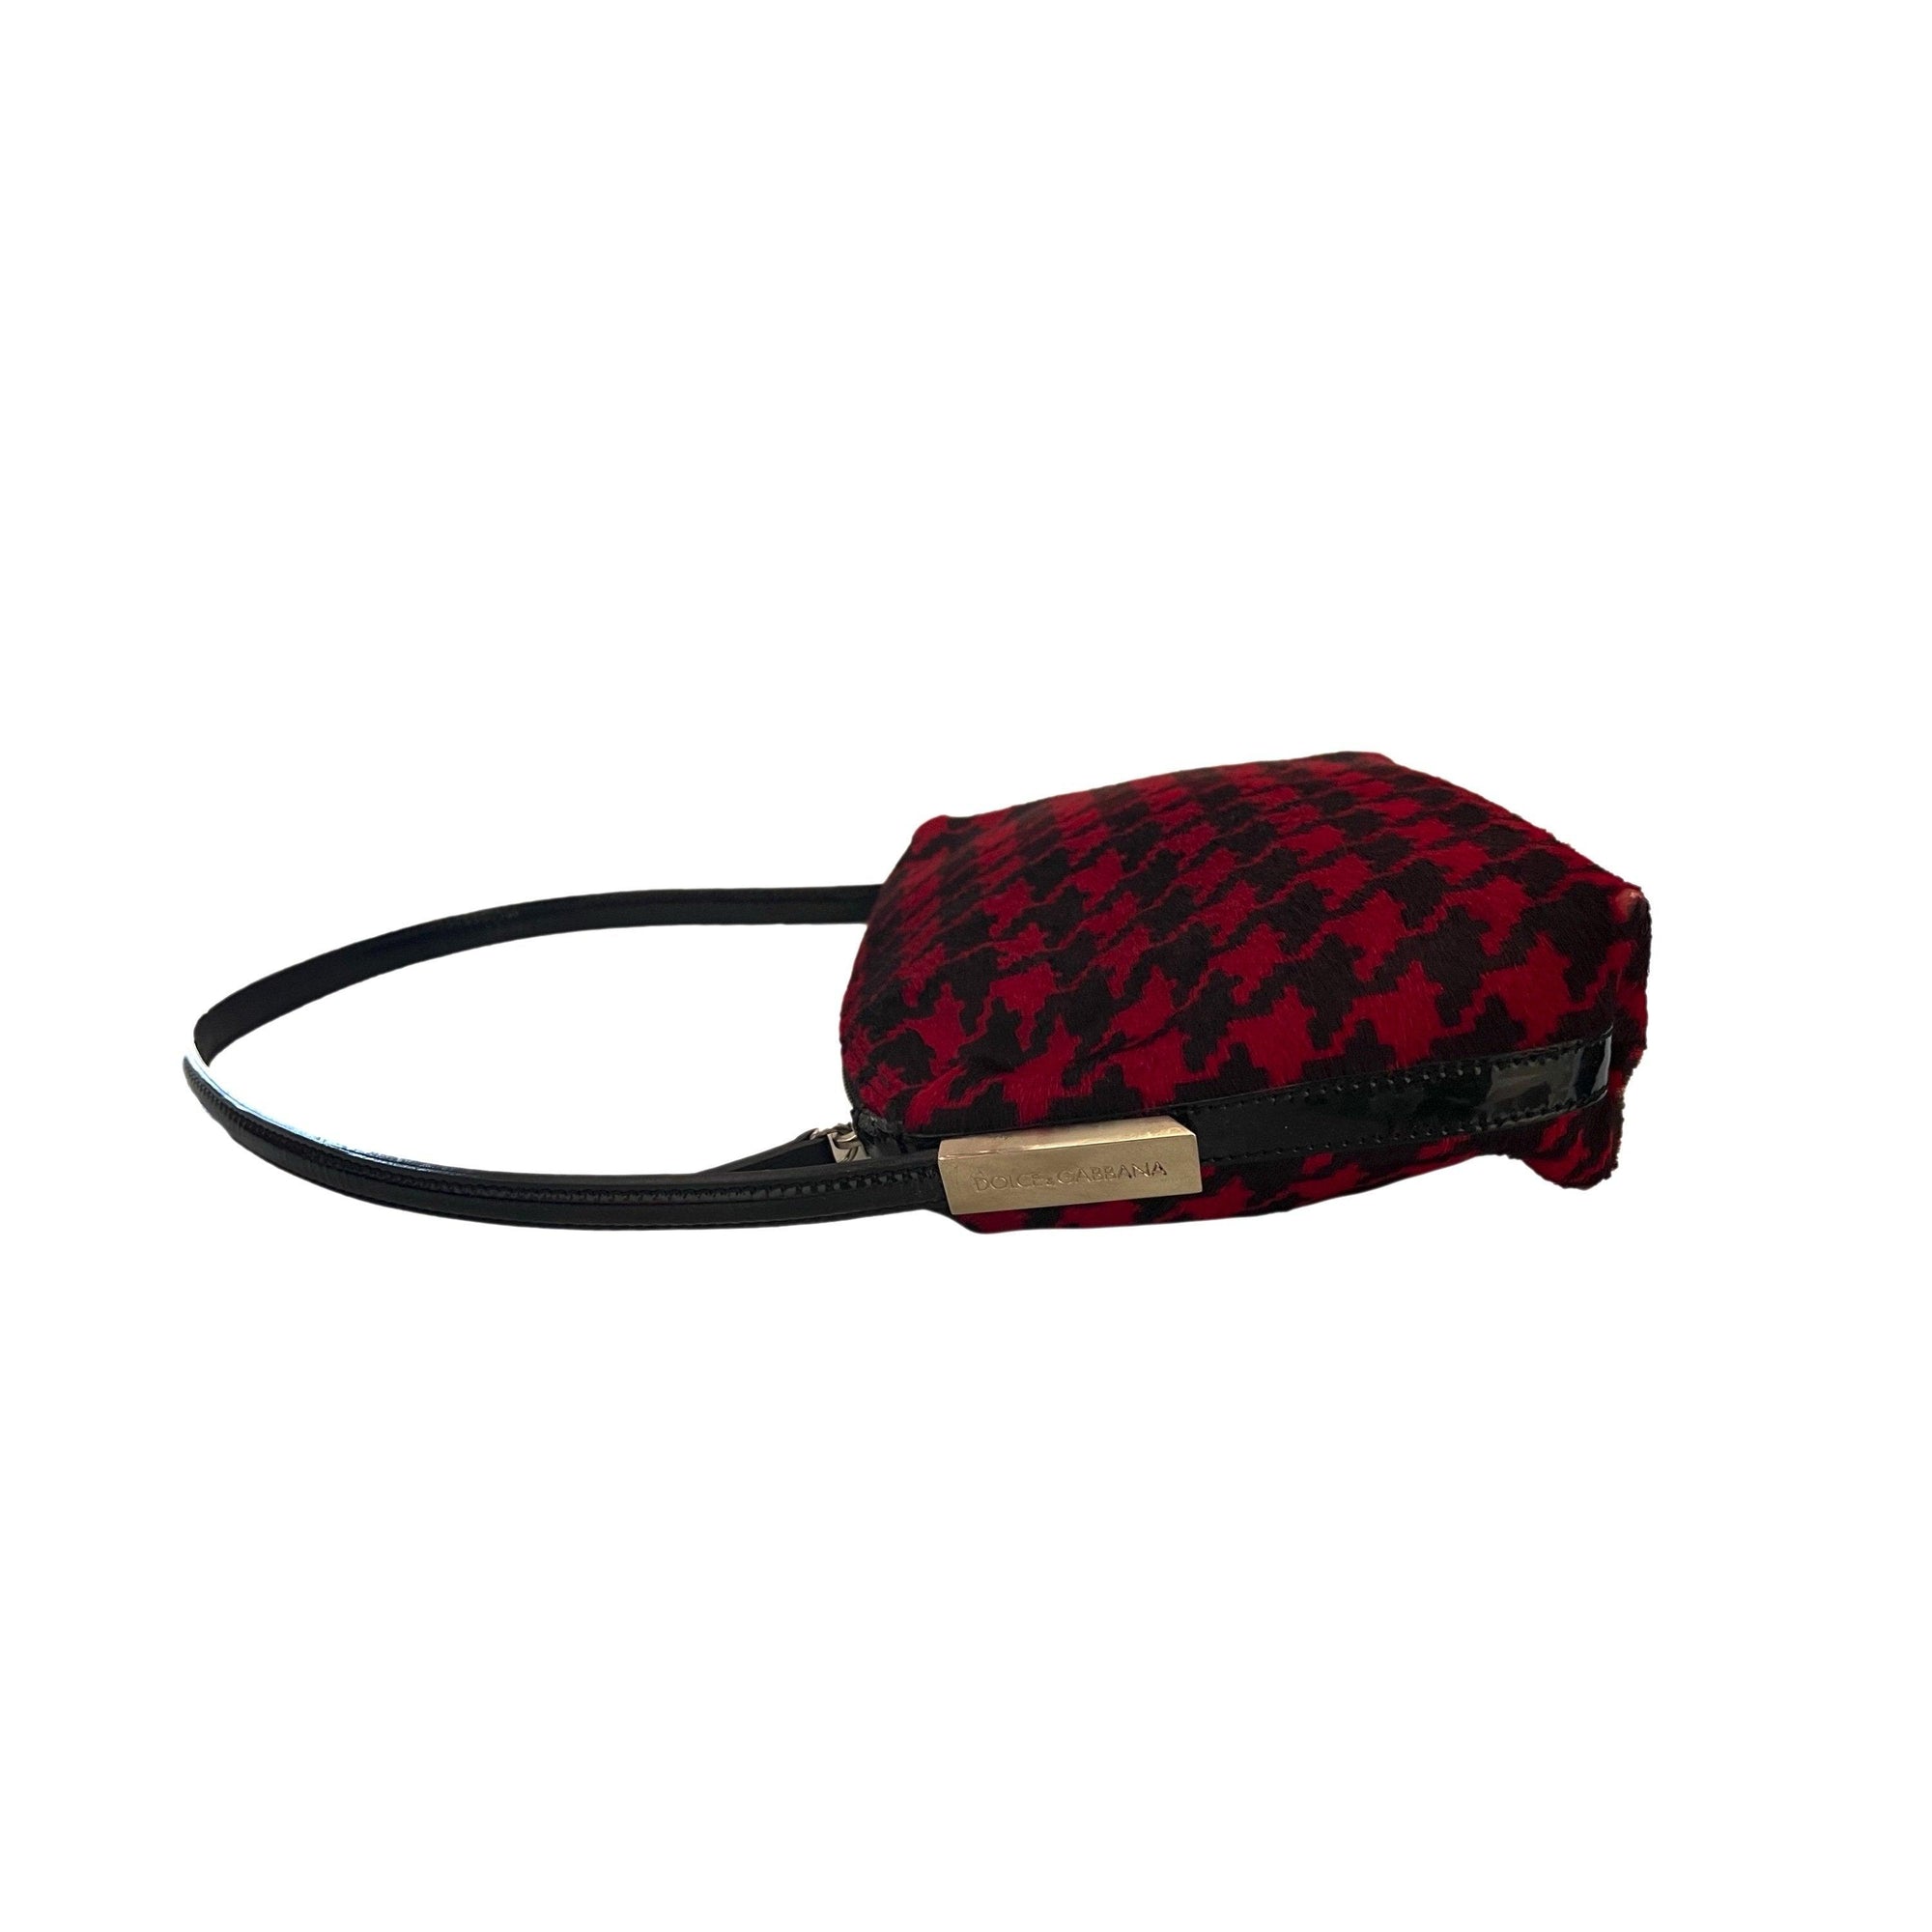 Dolce & Gabbana Red Houndstooth Mini Bag - Handbags